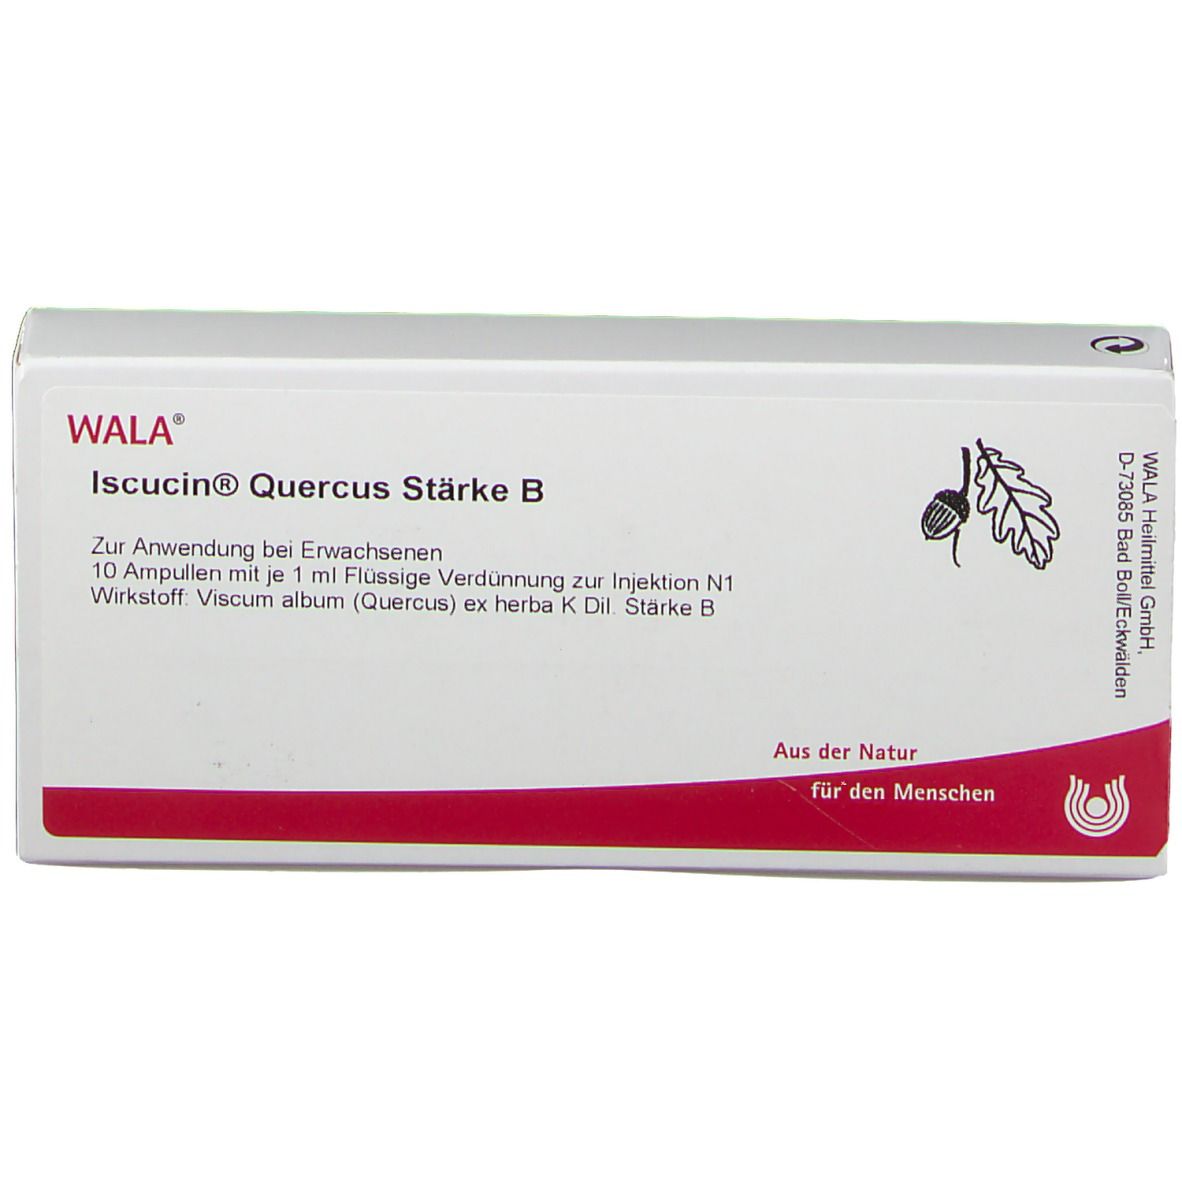 WALA® Iscucin Quercus Staerke B Amp.